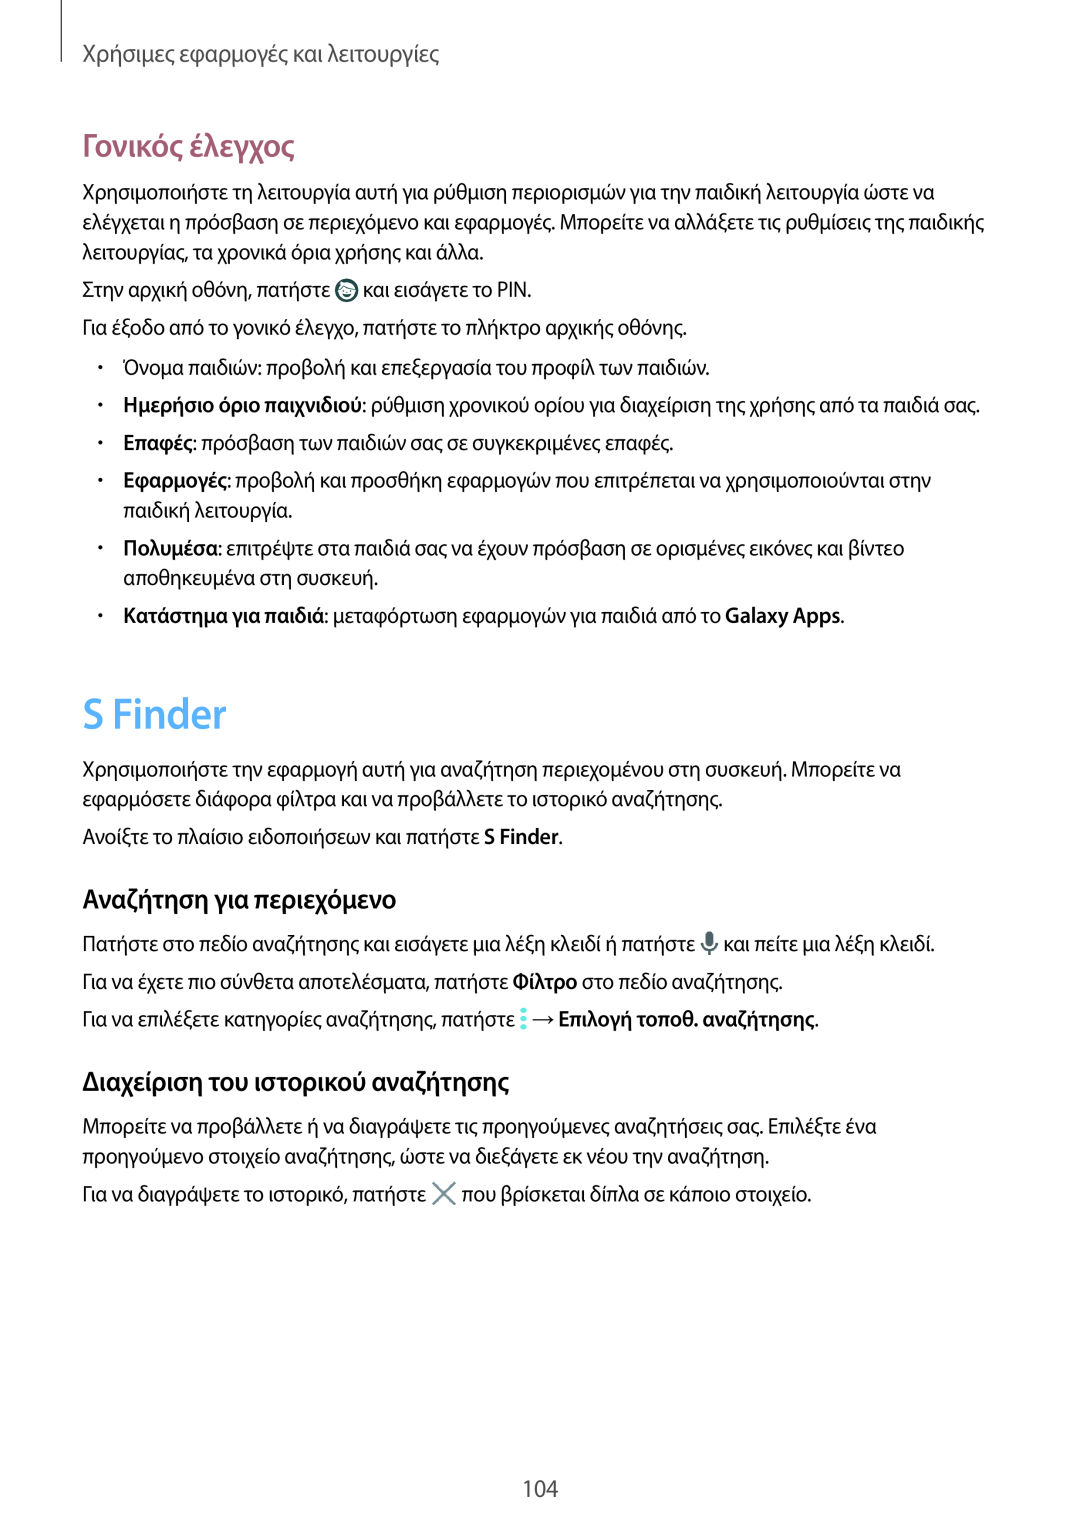 Samsung SM-T805NTSAEUR manual S Finder, Γονικός έλεγχος, Αναζήτηση για περιεχόμενο, Διαχείριση του ιστορικού αναζήτησης 